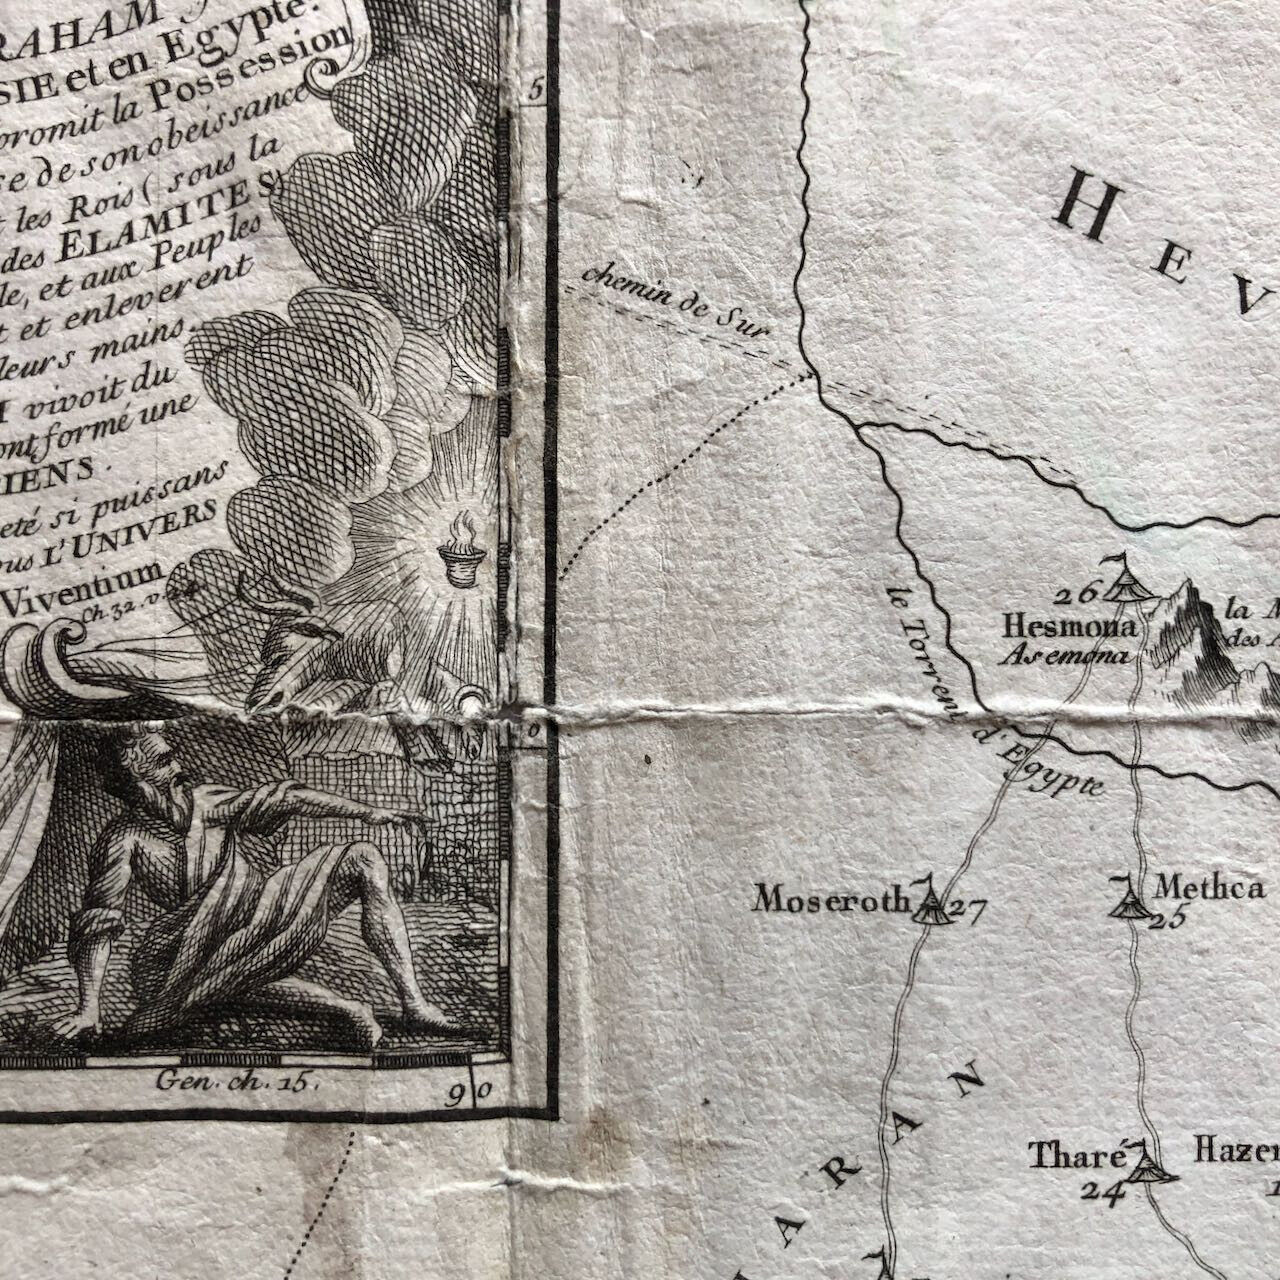 Robert — Terre de Chanaan [Israel - Palestine] — eau-forte — 42 x 55 cm. — 1743.